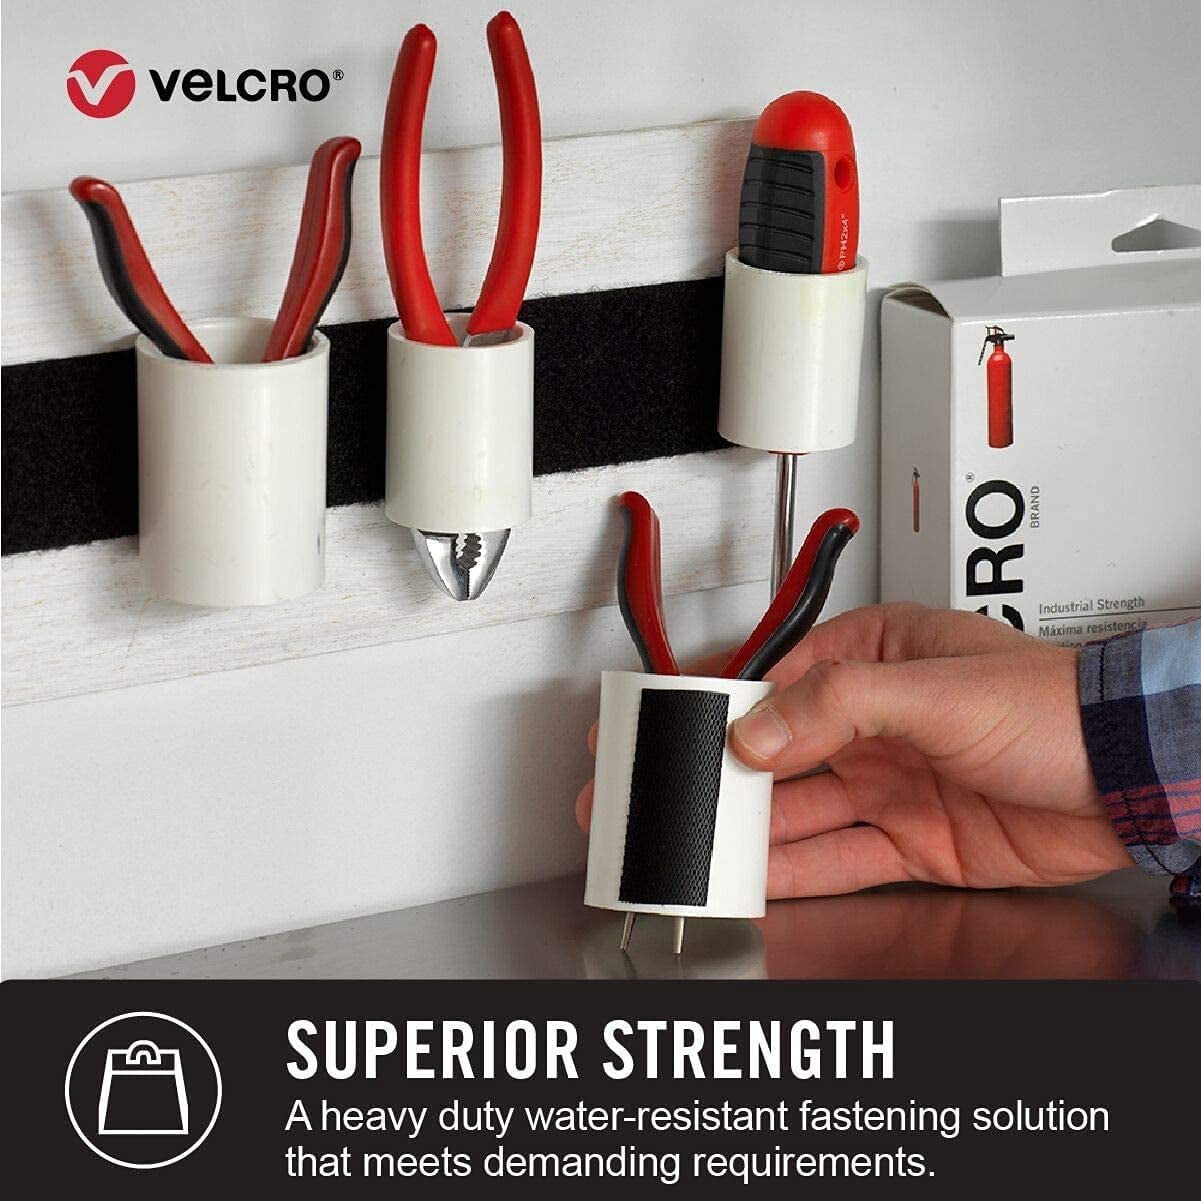 Velcro Brand Industrial Strength 5ft x 2in Roll, White